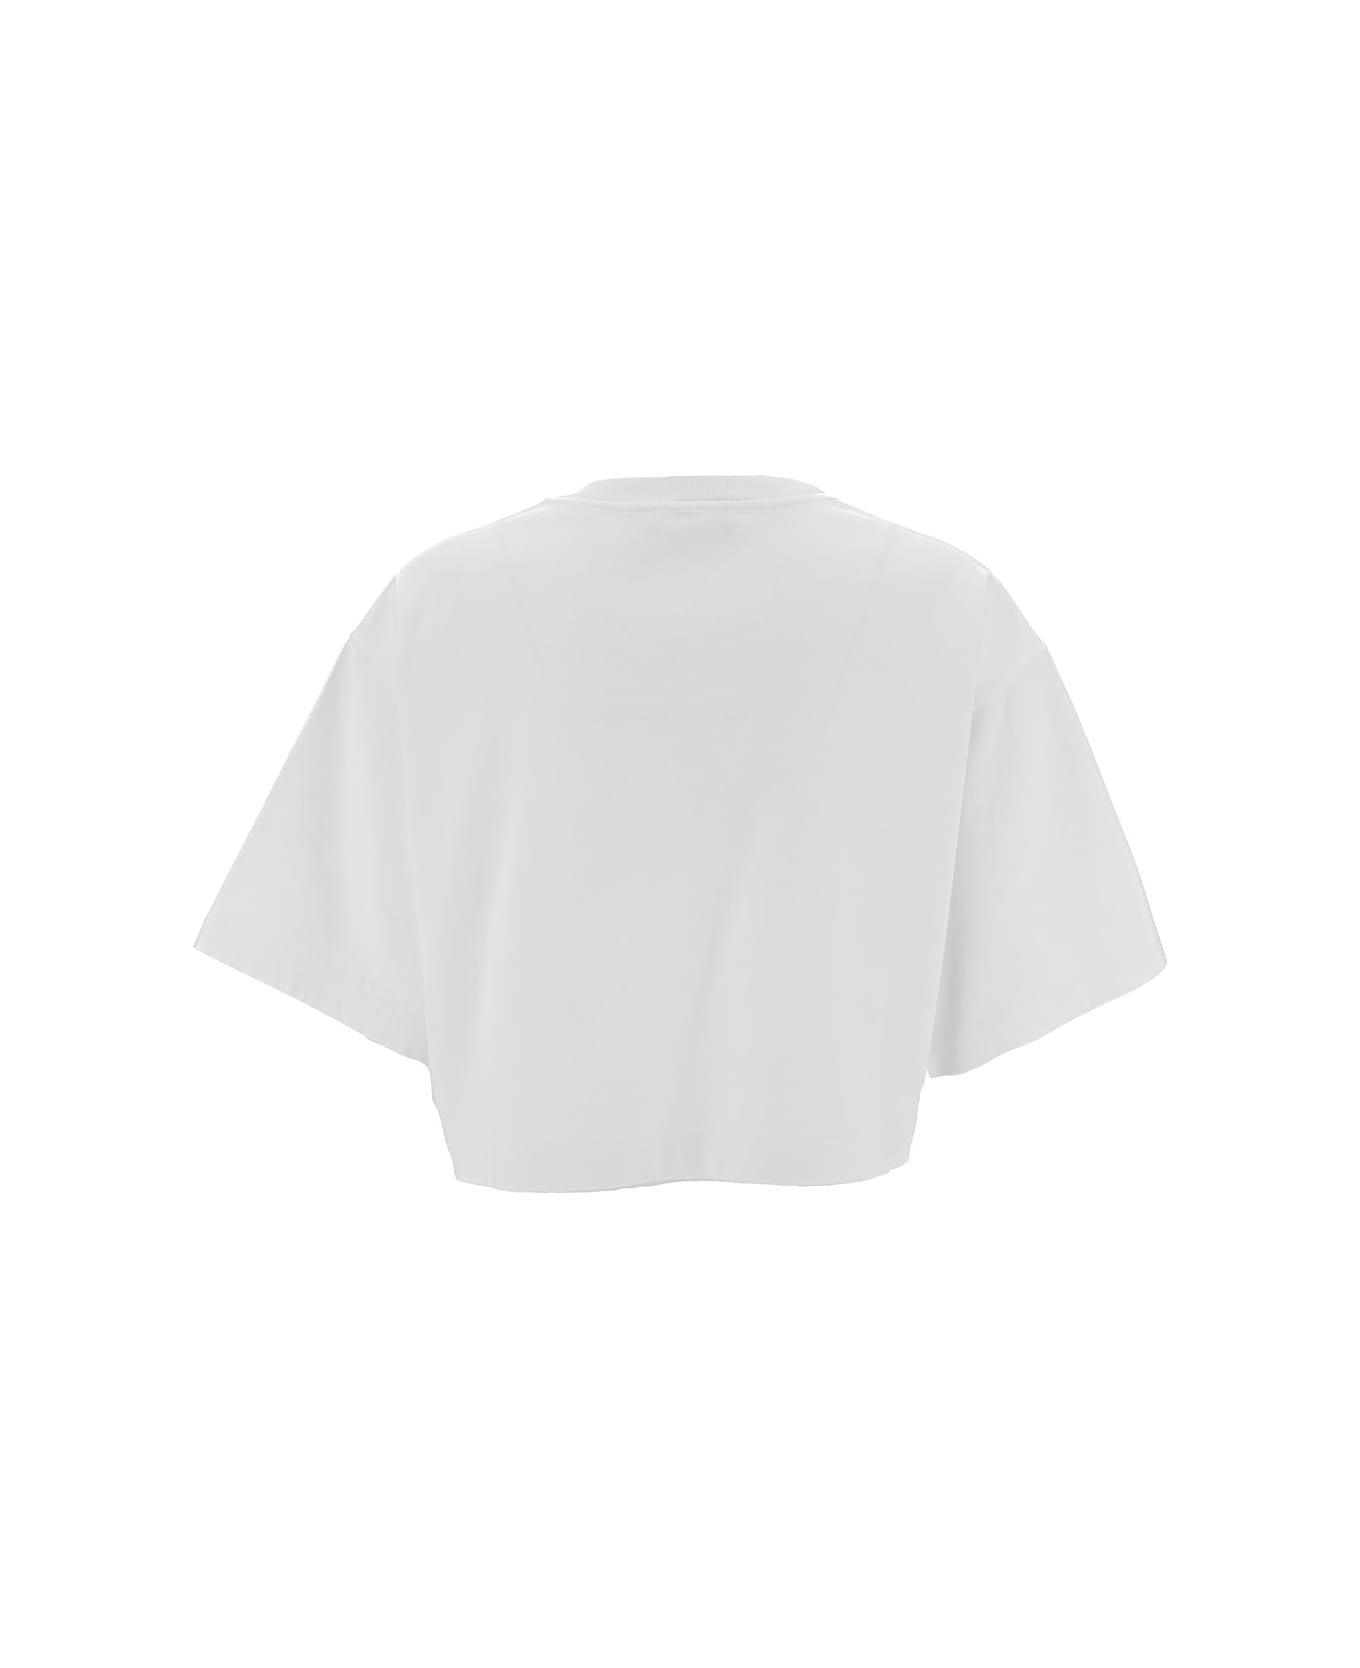 Dolce & Gabbana White Crewneck T-shirt With Dg Logo Ptint In Cotton Woman - White